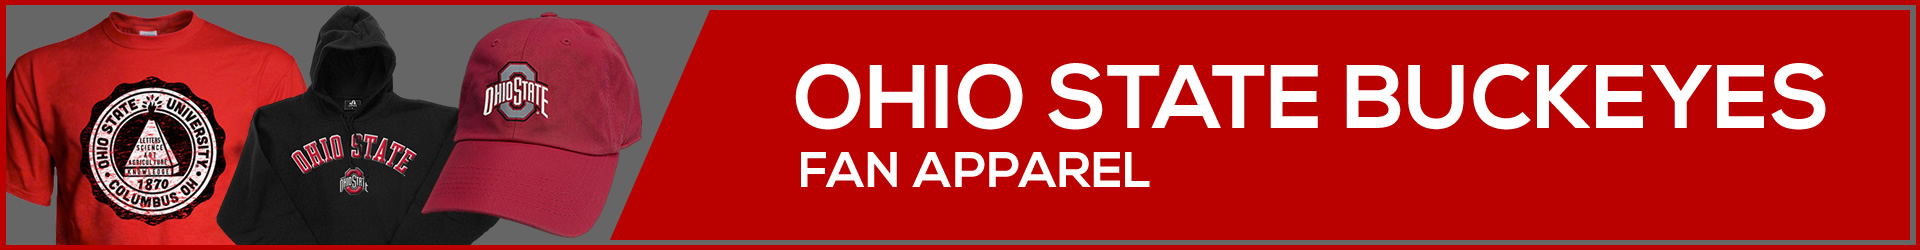 Ohio State Buckeyes Apparel